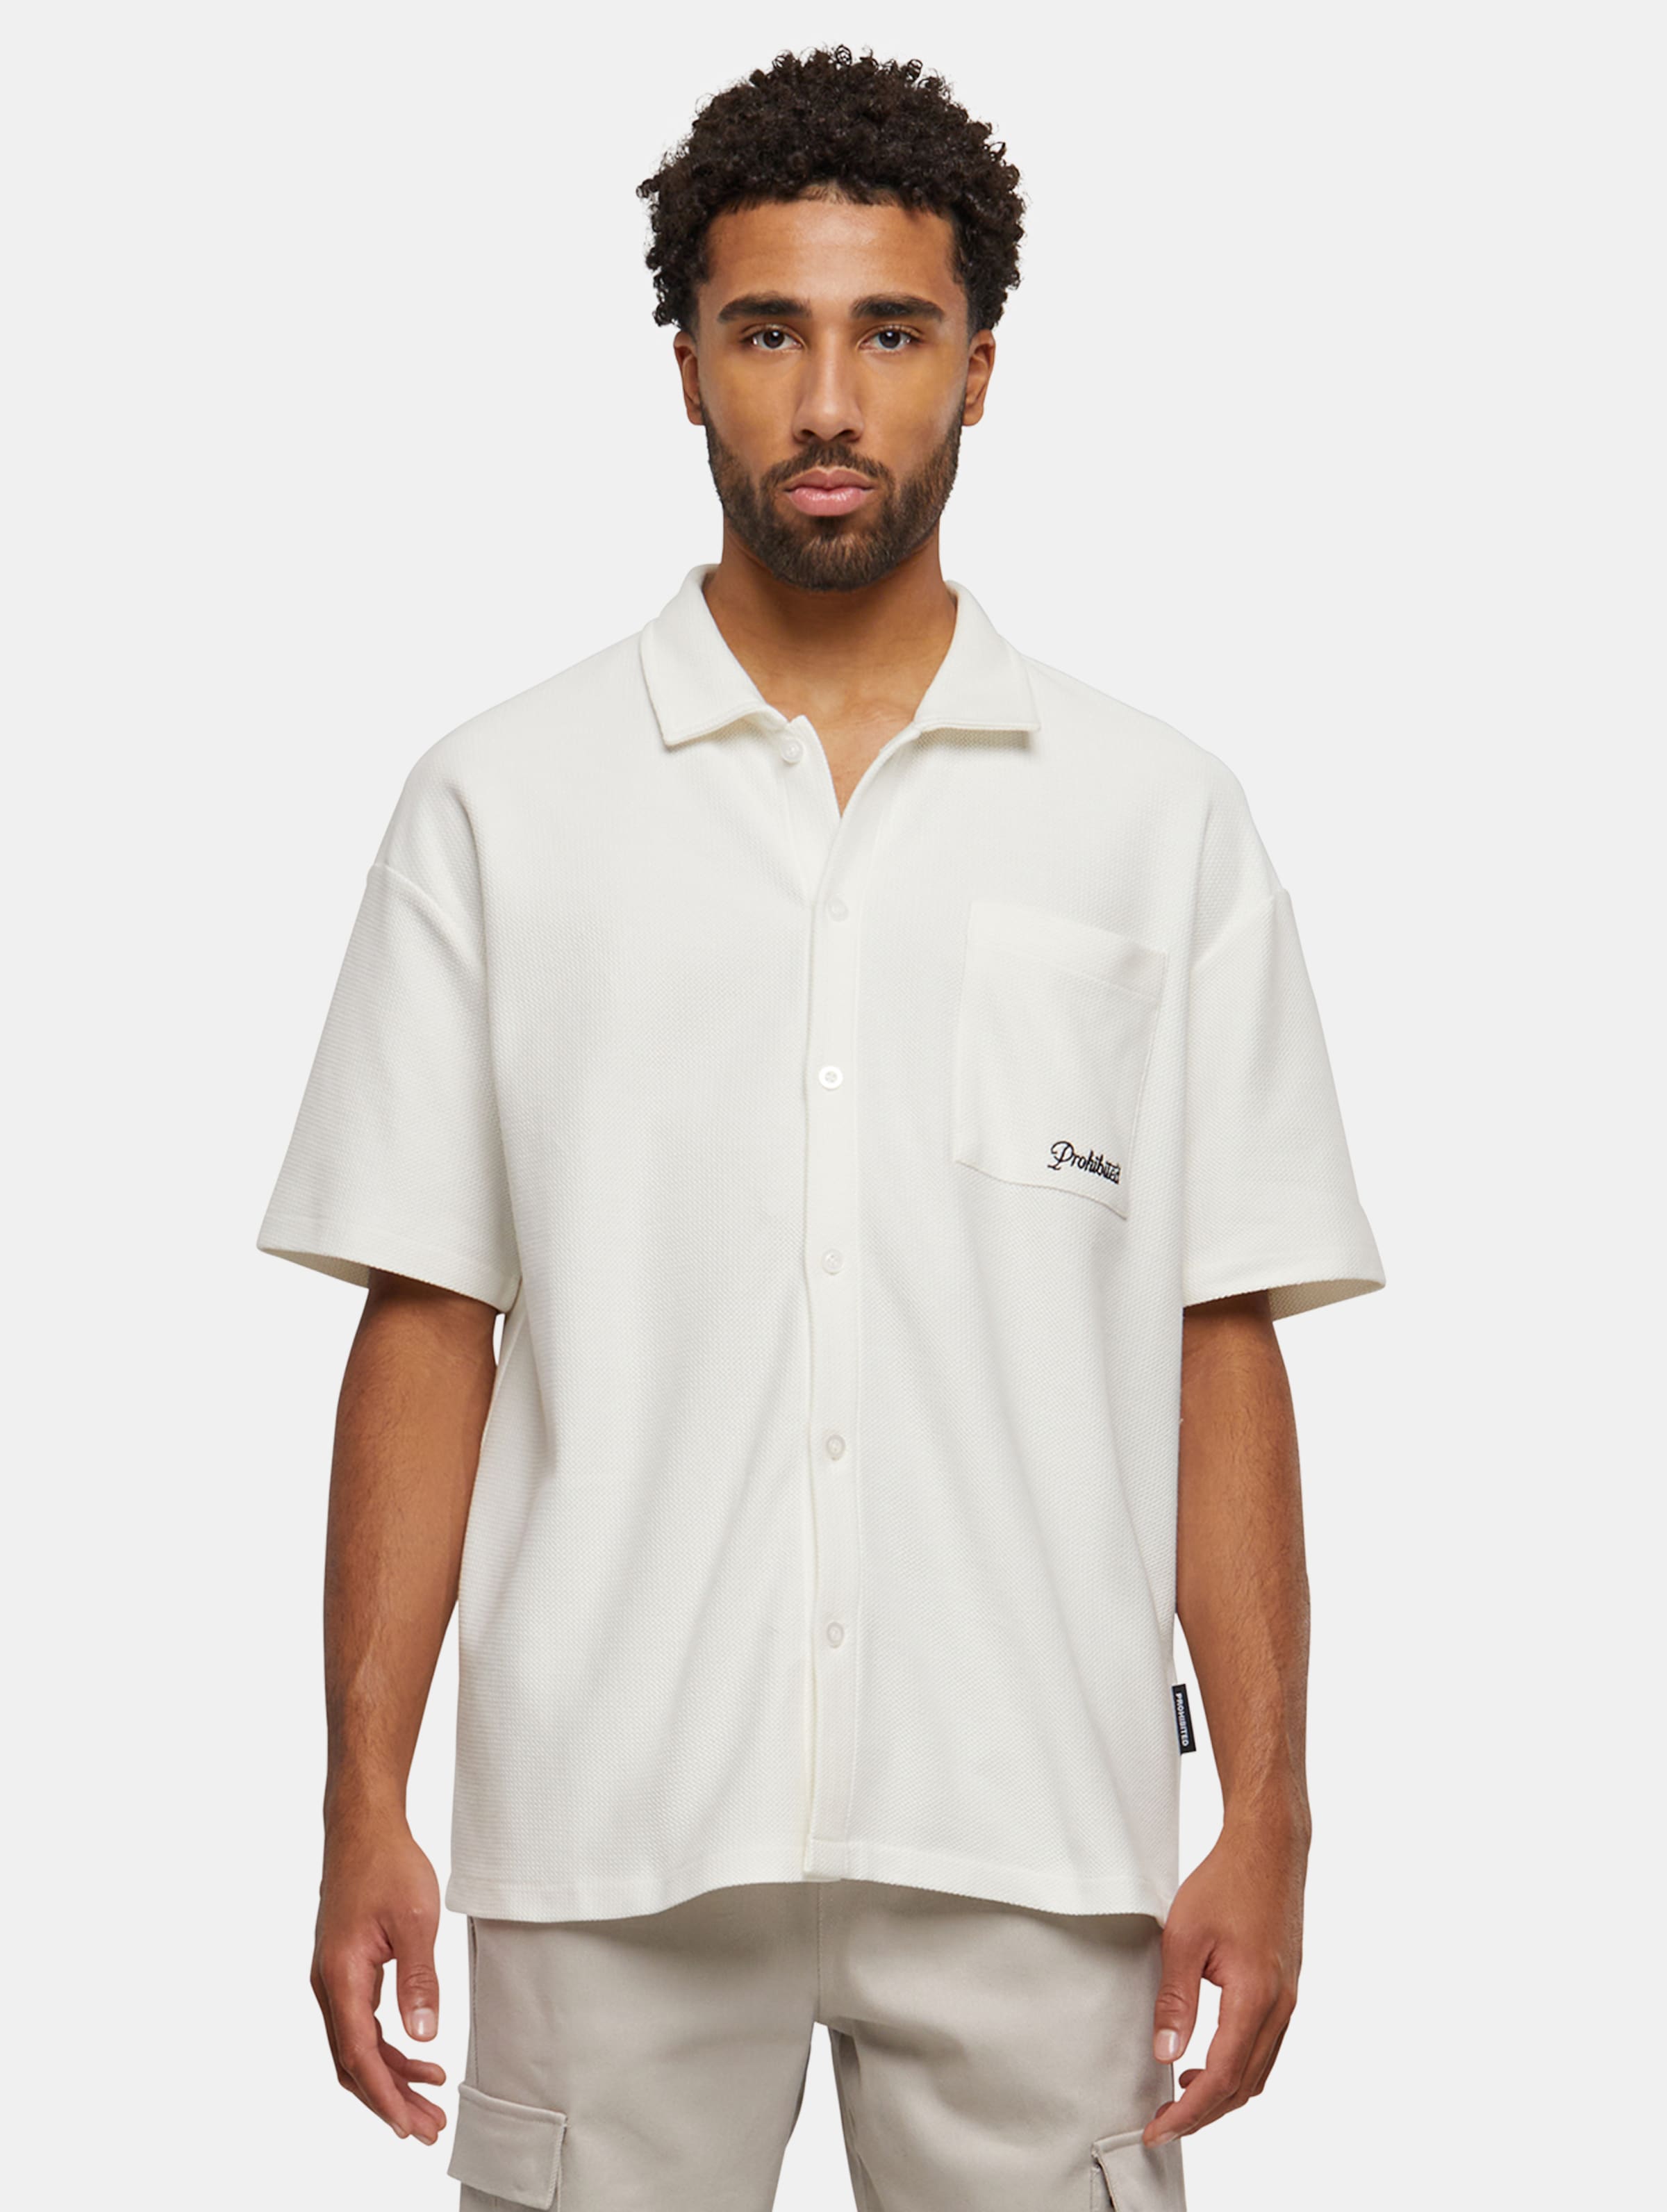 Prohibited Structure Hemden Männer,Unisex op kleur wit, Maat XL